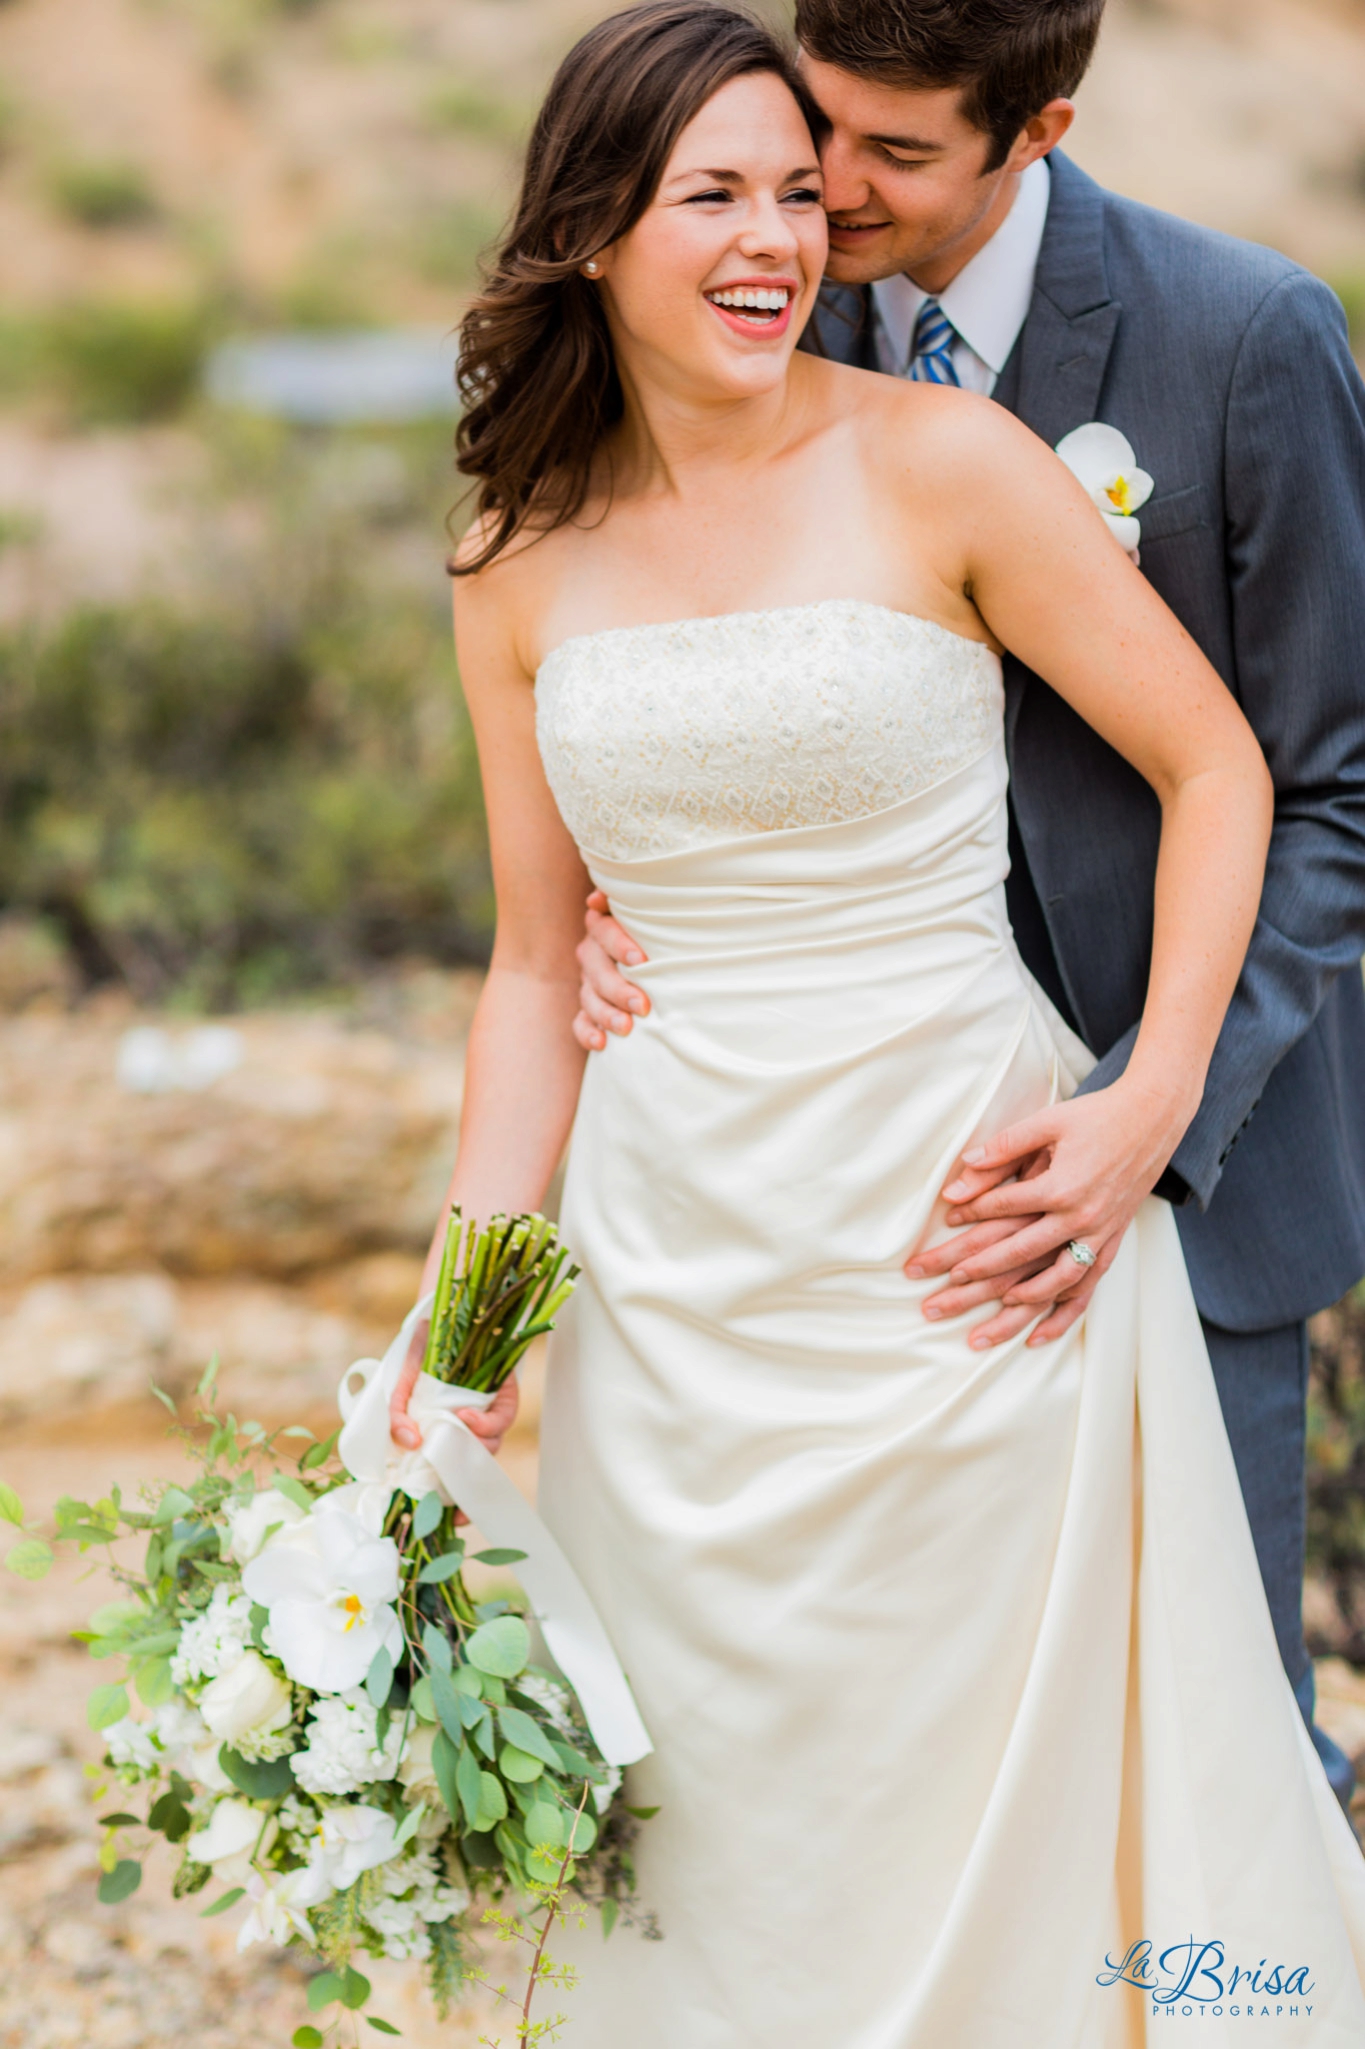 Jennifer & Trevor | Wedding Photography | Tucson, AZ | Chris Hsieh